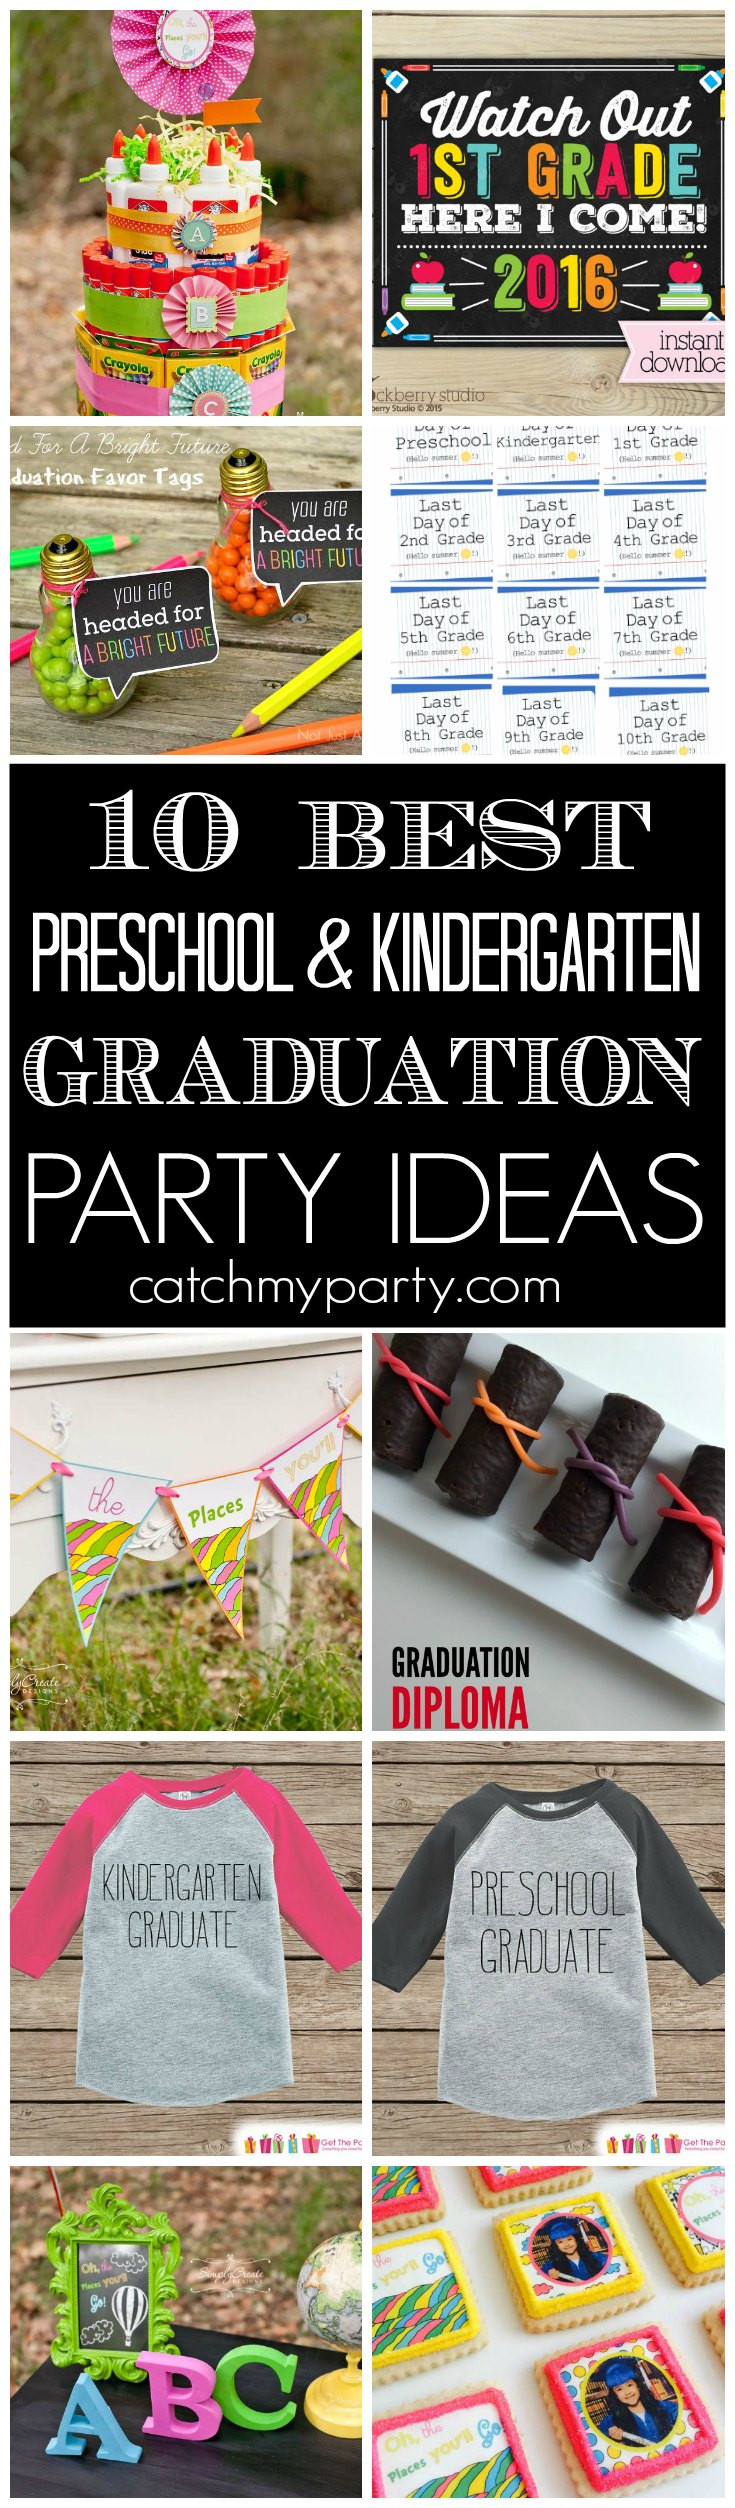 Graduation Party Activity Ideas
 10 Best Preschool & Kindergarten Graduation Party Ideas